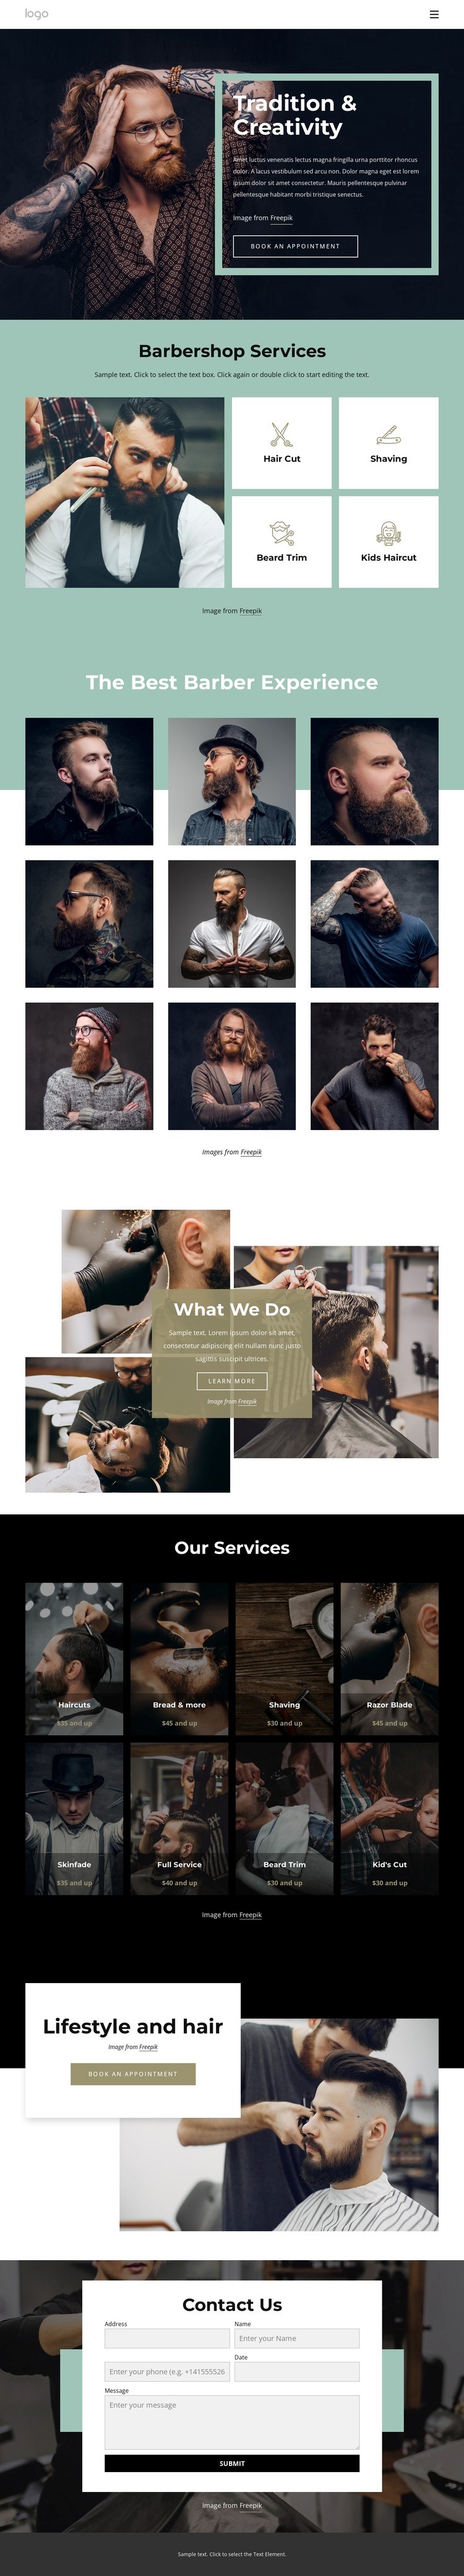 Public barber salon Web Page Design